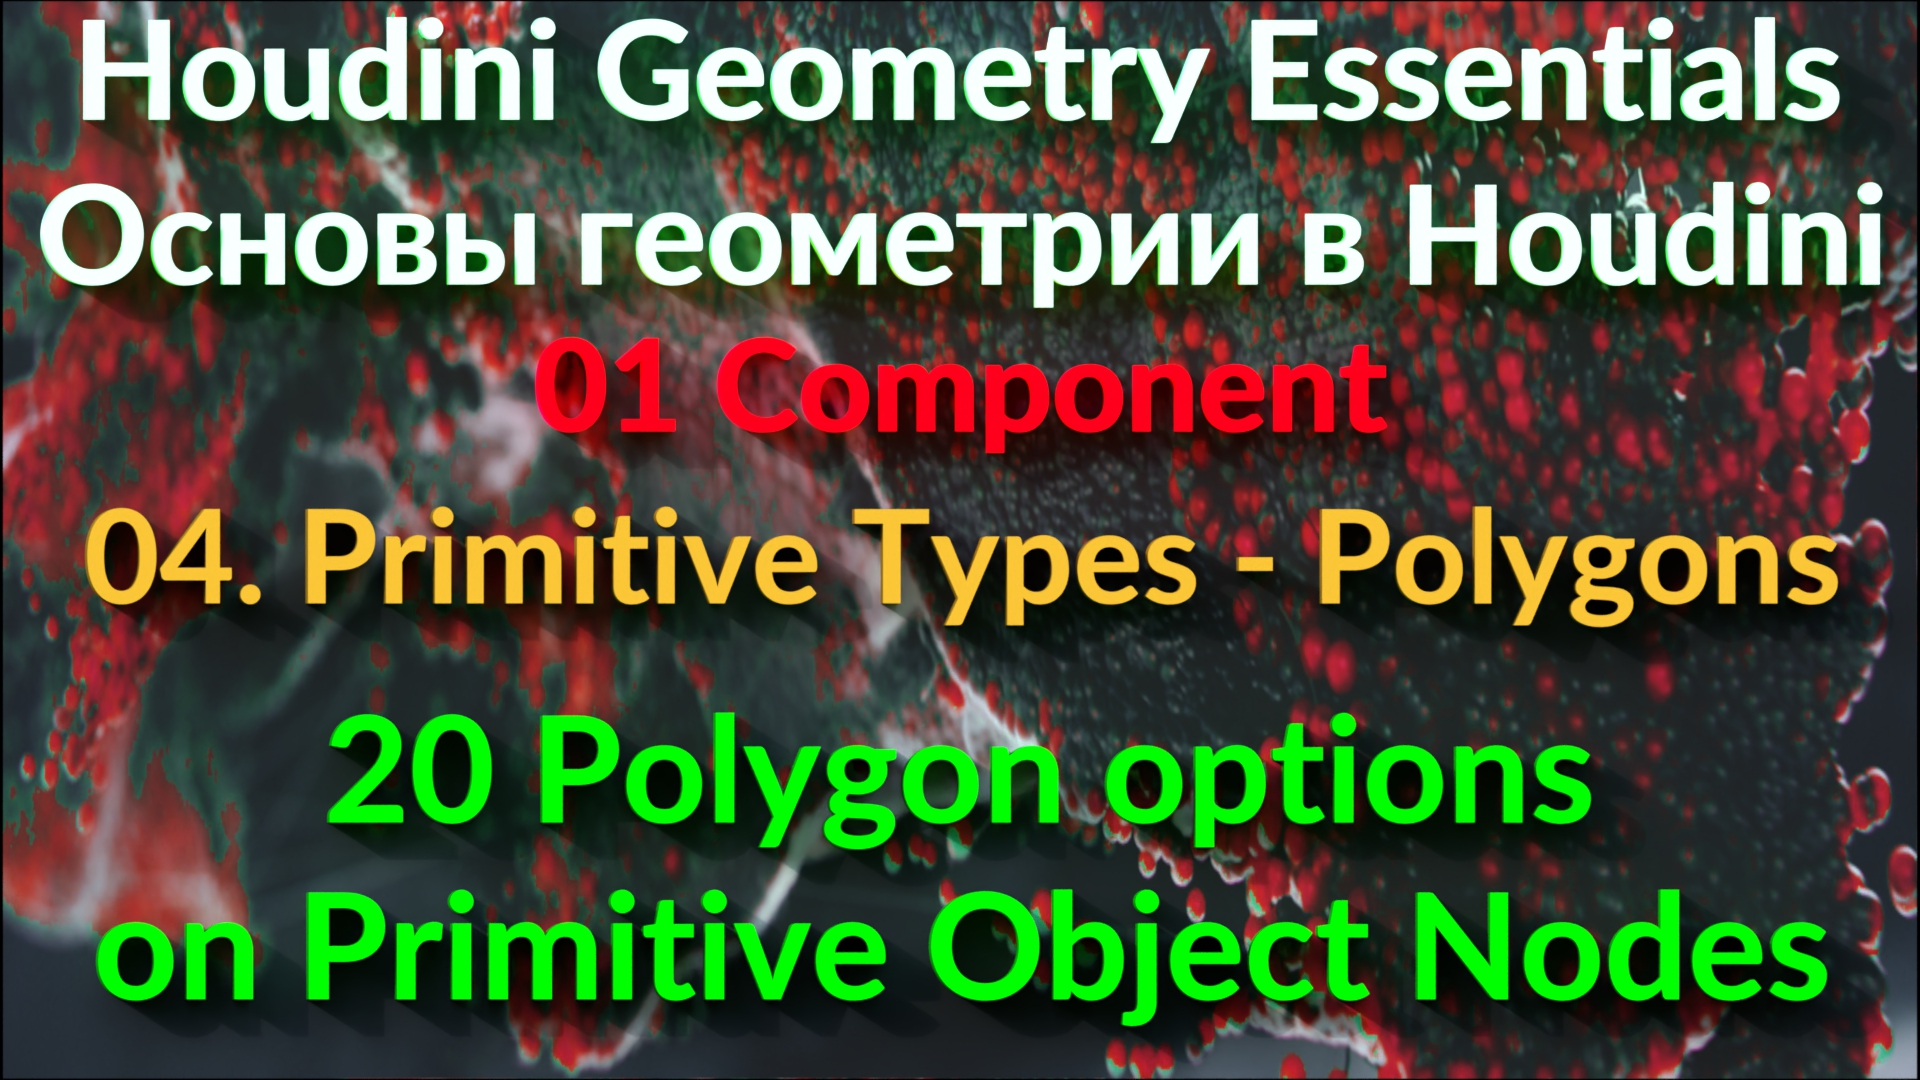 01_04_20 Polygon options on Primitive Object Nodes